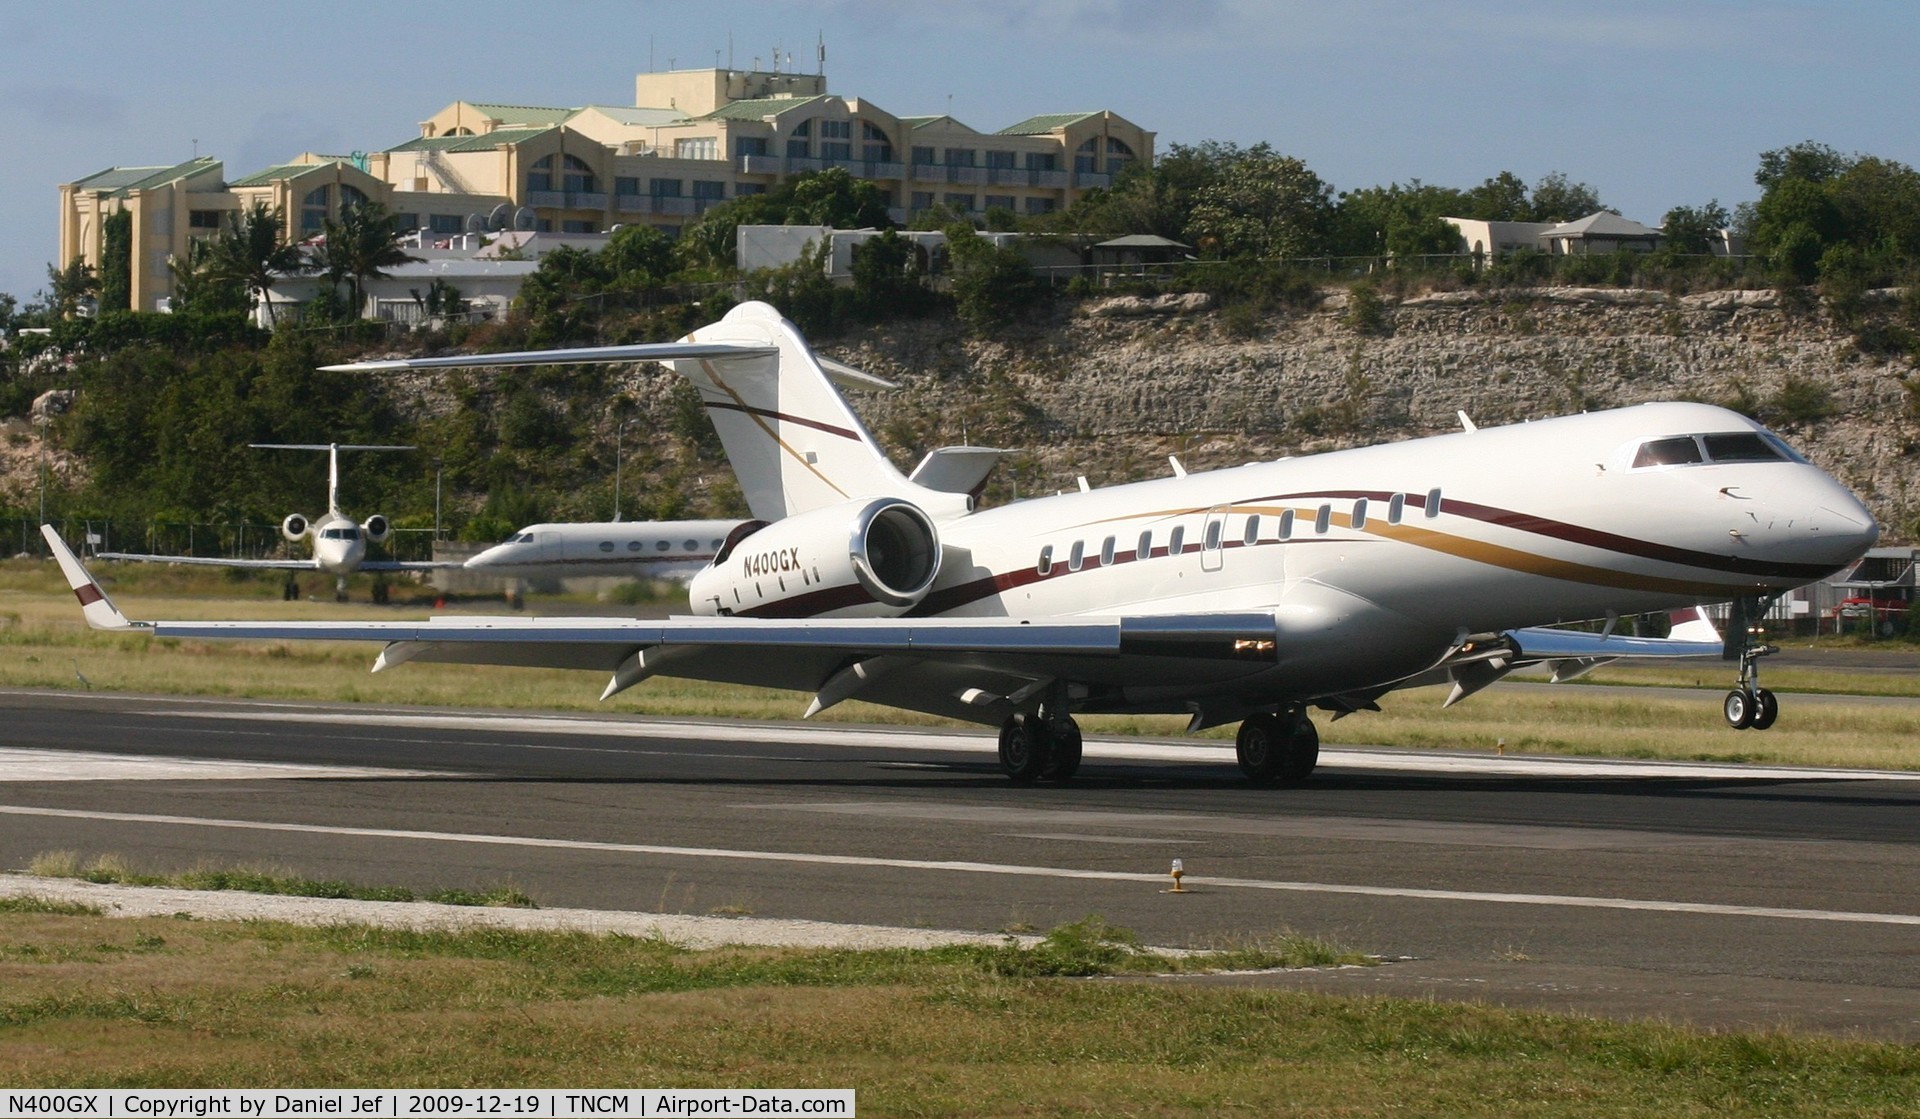 N400GX, 1999 Bombardier BD-700-1A10 Global Express C/N 9037, BD N400GX landing at TNCM on runway 10